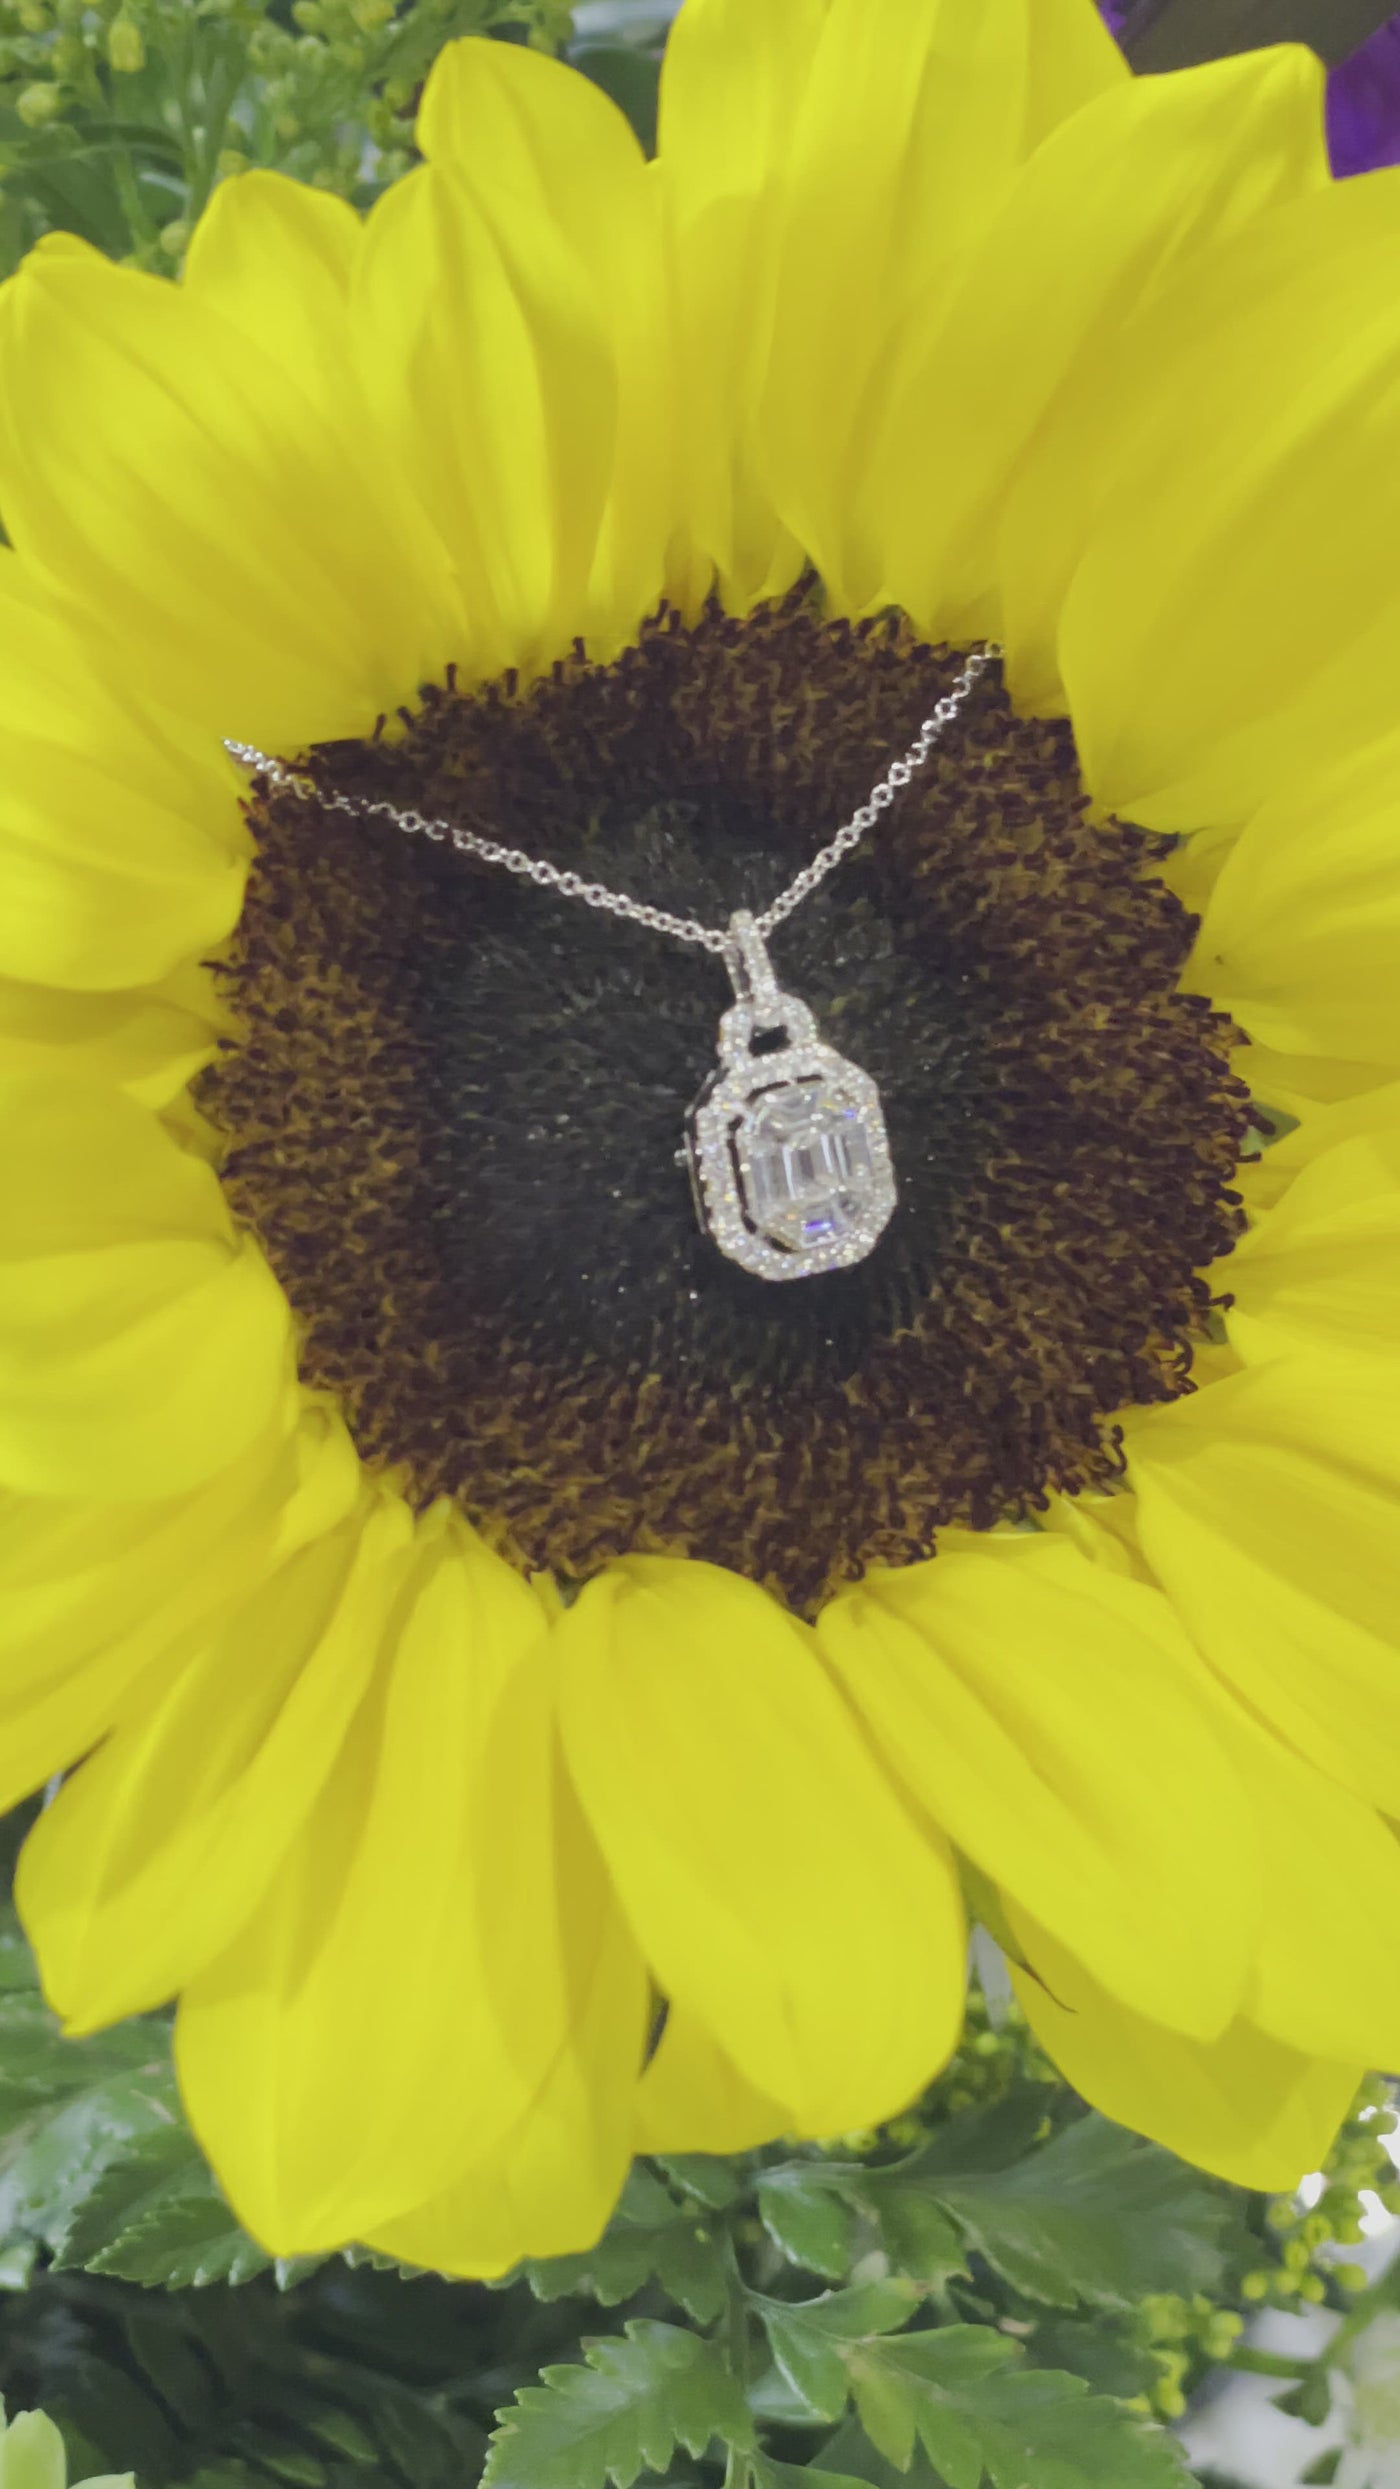 Apparel & Accessories > Jewelry > Necklaces Simon G Diamond Mosaic Pendant in 18Kt White Gold LP4353 Pierce Custom Jewelers